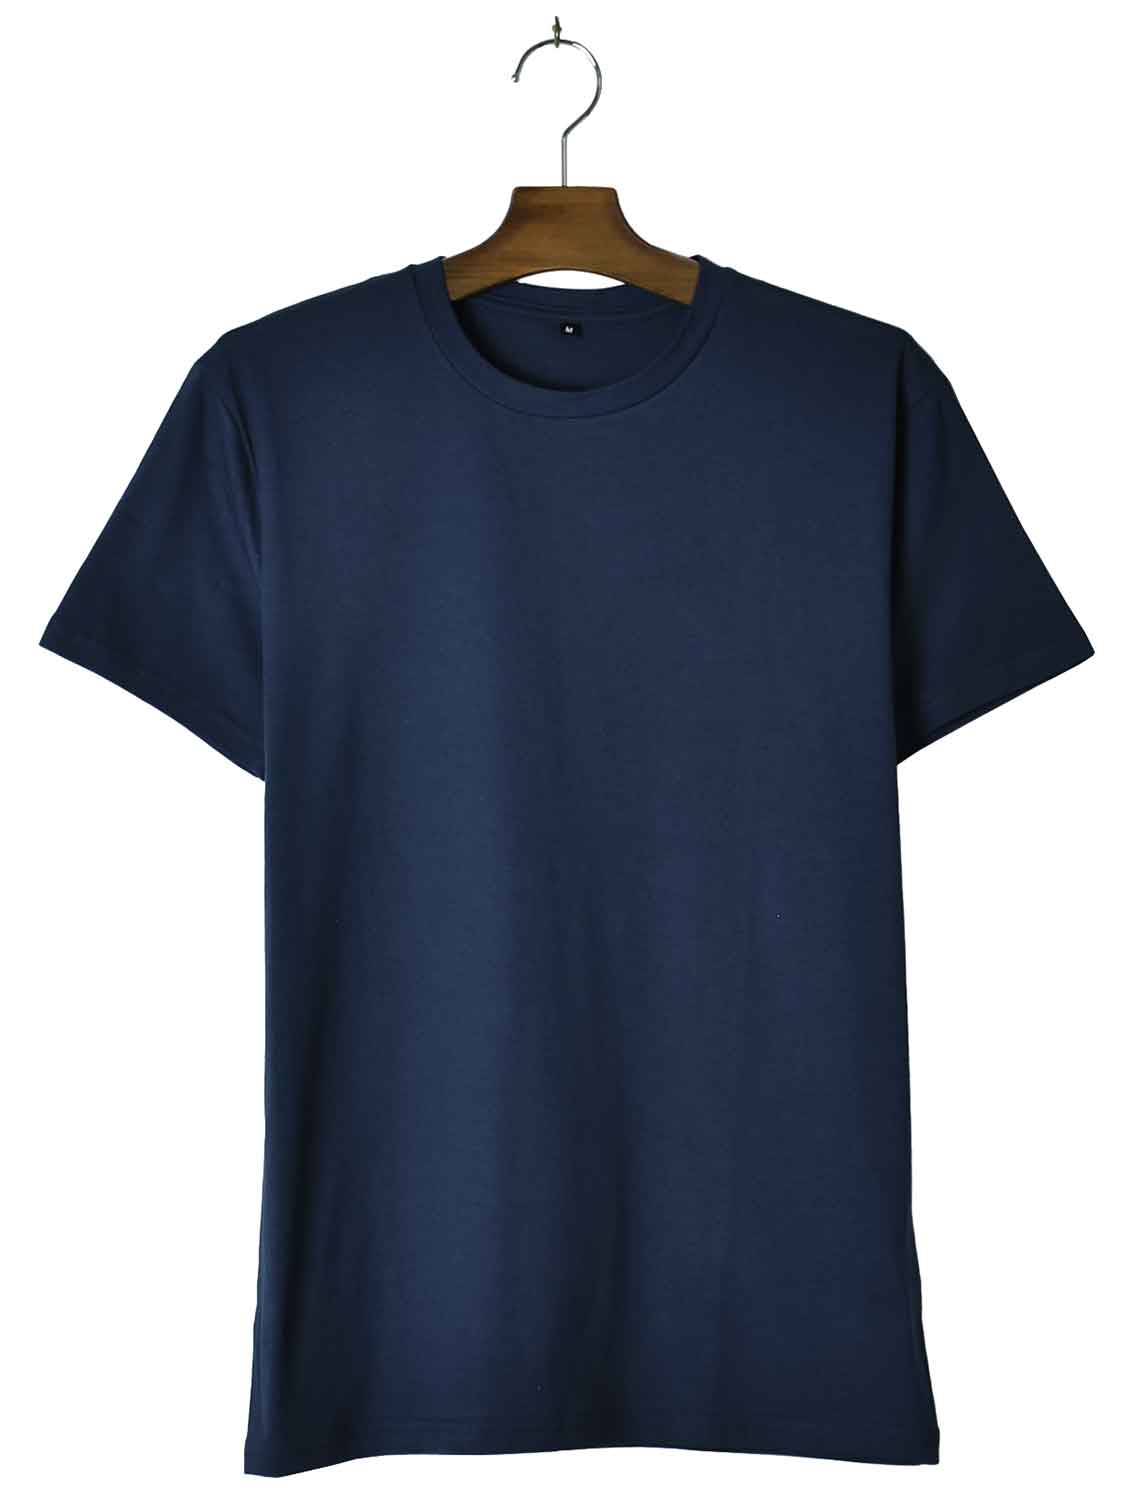 Tシャツ メンズ 半袖 DRYストレッチ 吸汗速乾 SDGS 再生繊維 送料無料 通販Y